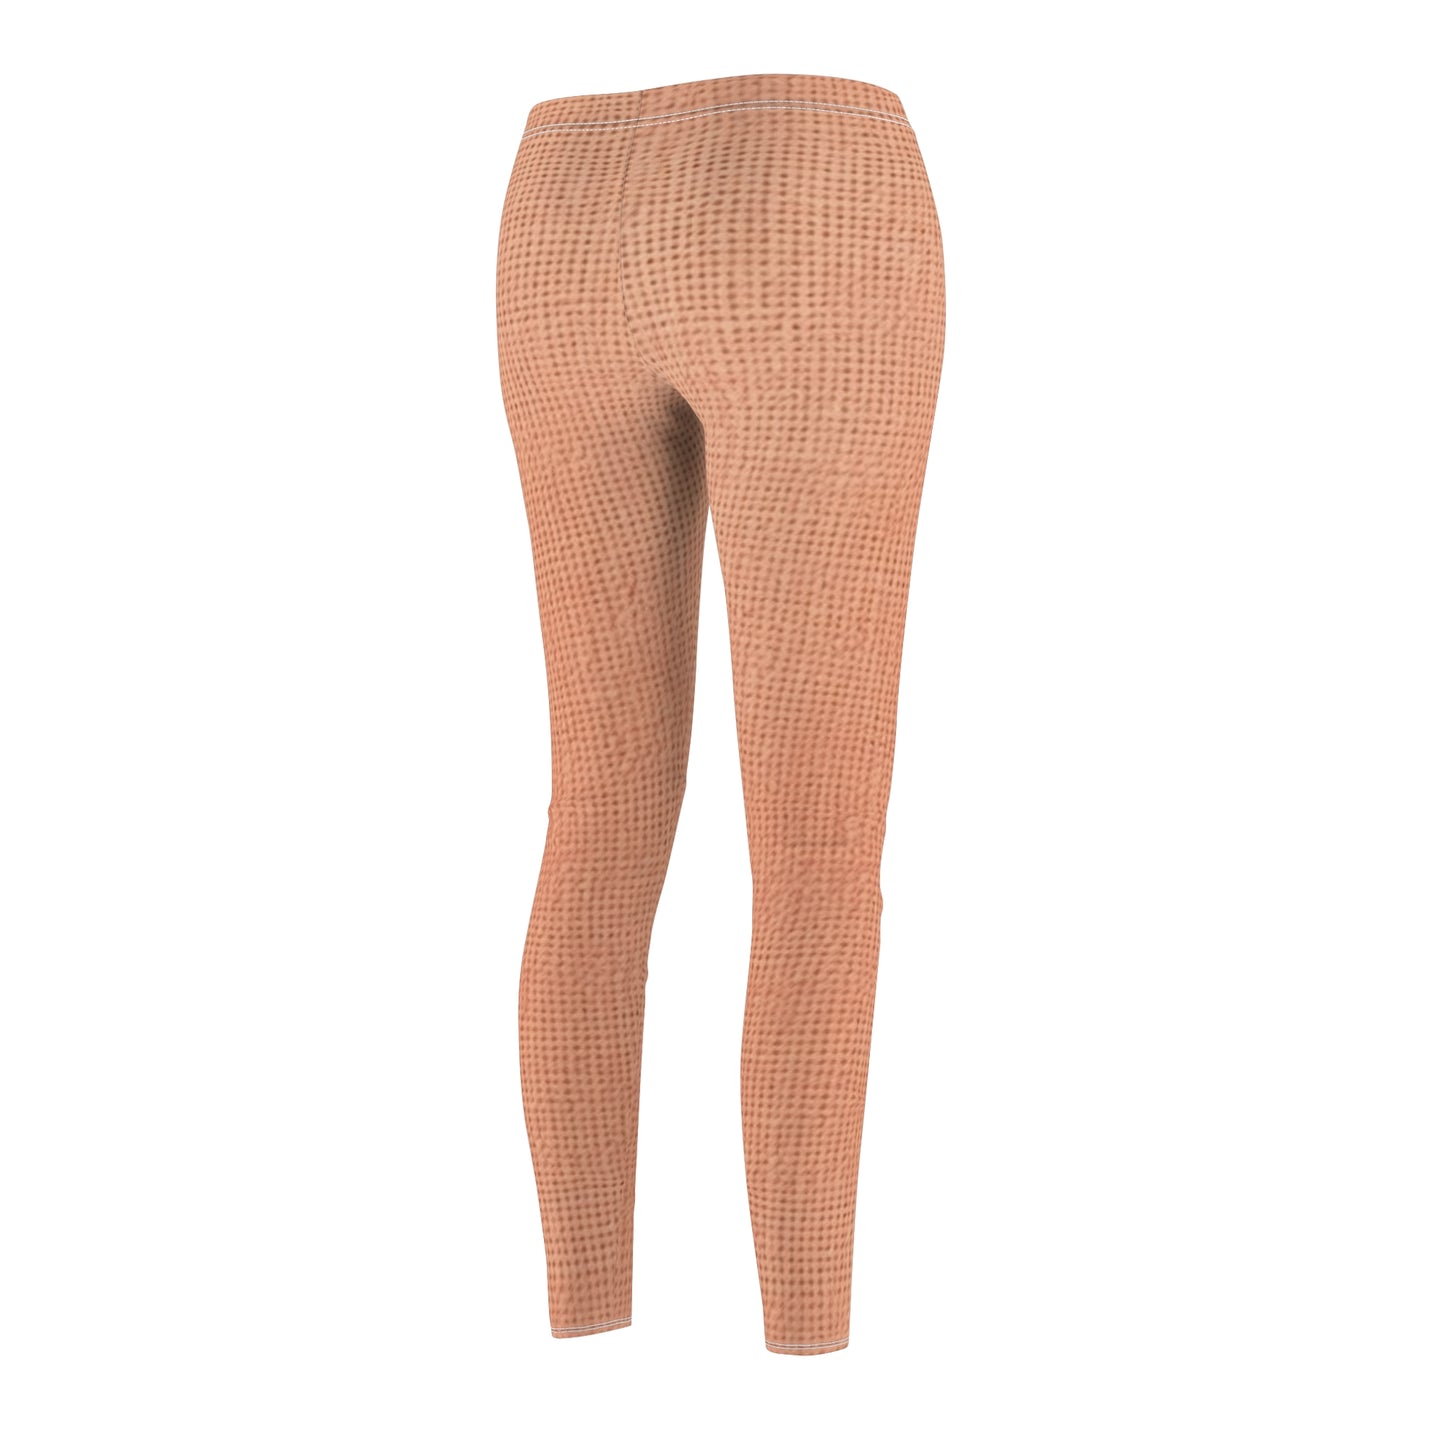 Soft Pink-Orange Peach: Denim-Inspired, Lush Fabric - Women's Cut & Sew Casual Leggings (AOP)